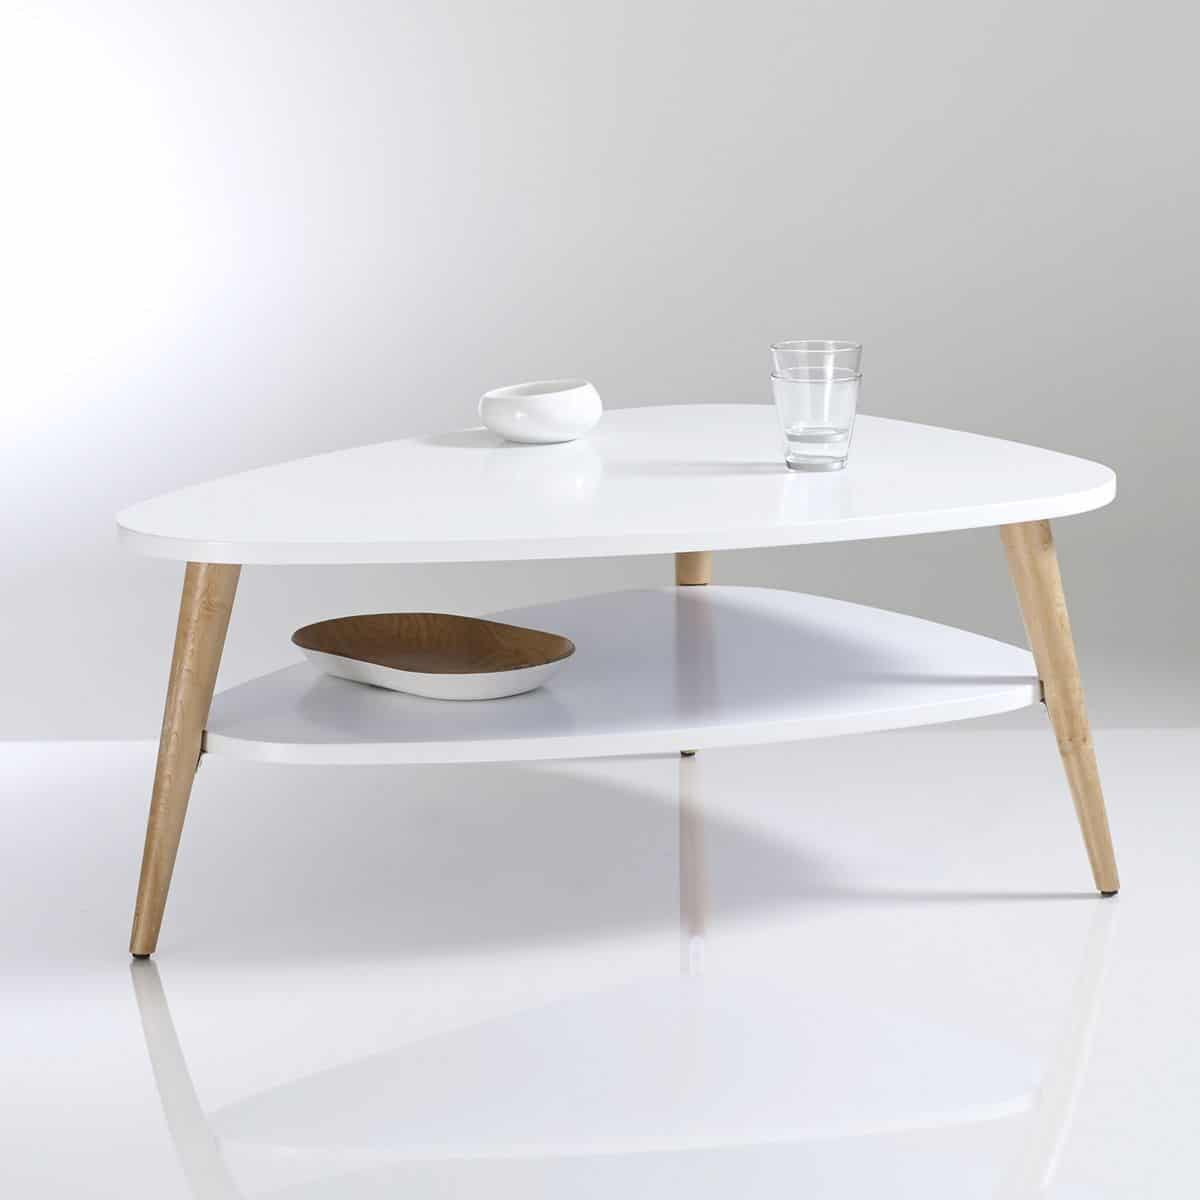 RETRO TABLE BASSE DSW EIFFEL 60x50 VINTAGE DESIGN MODERNE TUTUMI BLANC NOIR 